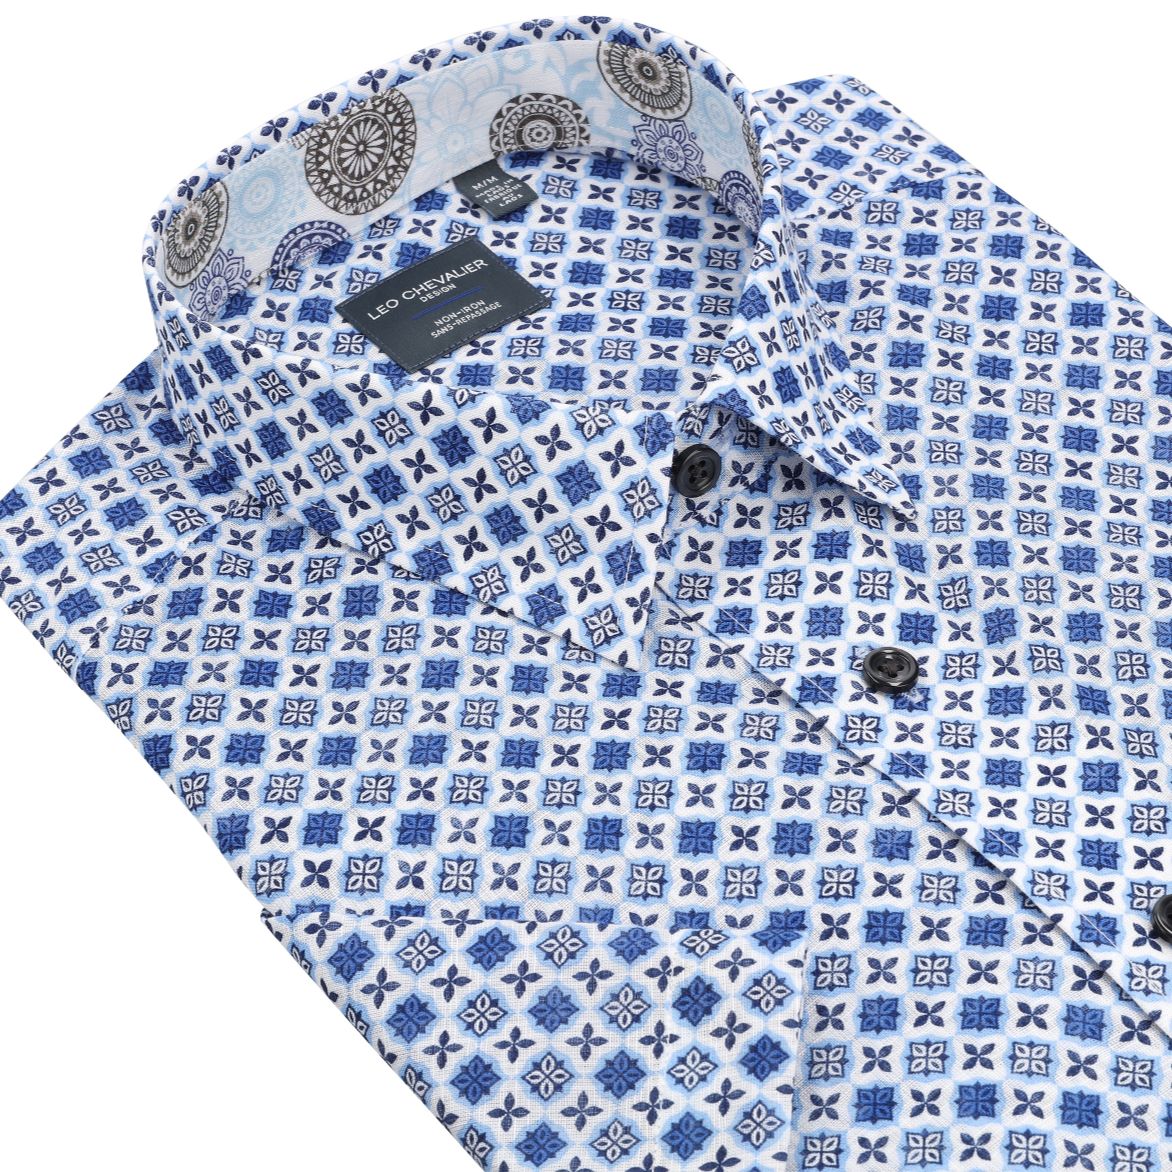 Blue Neat Geometric Print Short Sleeve No-Iron Cotton Sport Shirt with Hidden Button Down Collar by Leo Chevalier